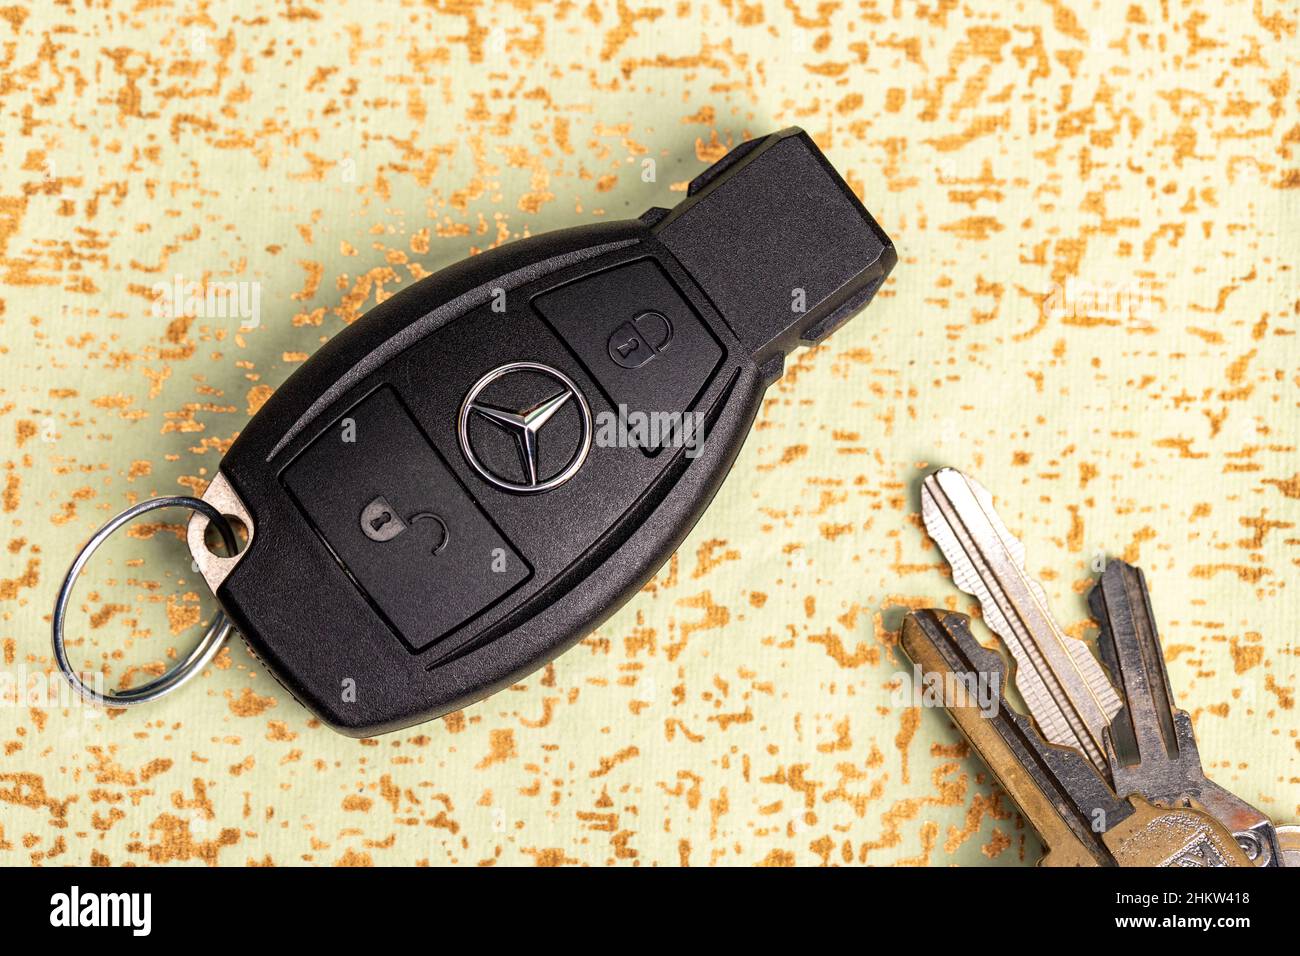 499 Mercedes Benz Key Images, Stock Photos, 3D objects, & Vectors